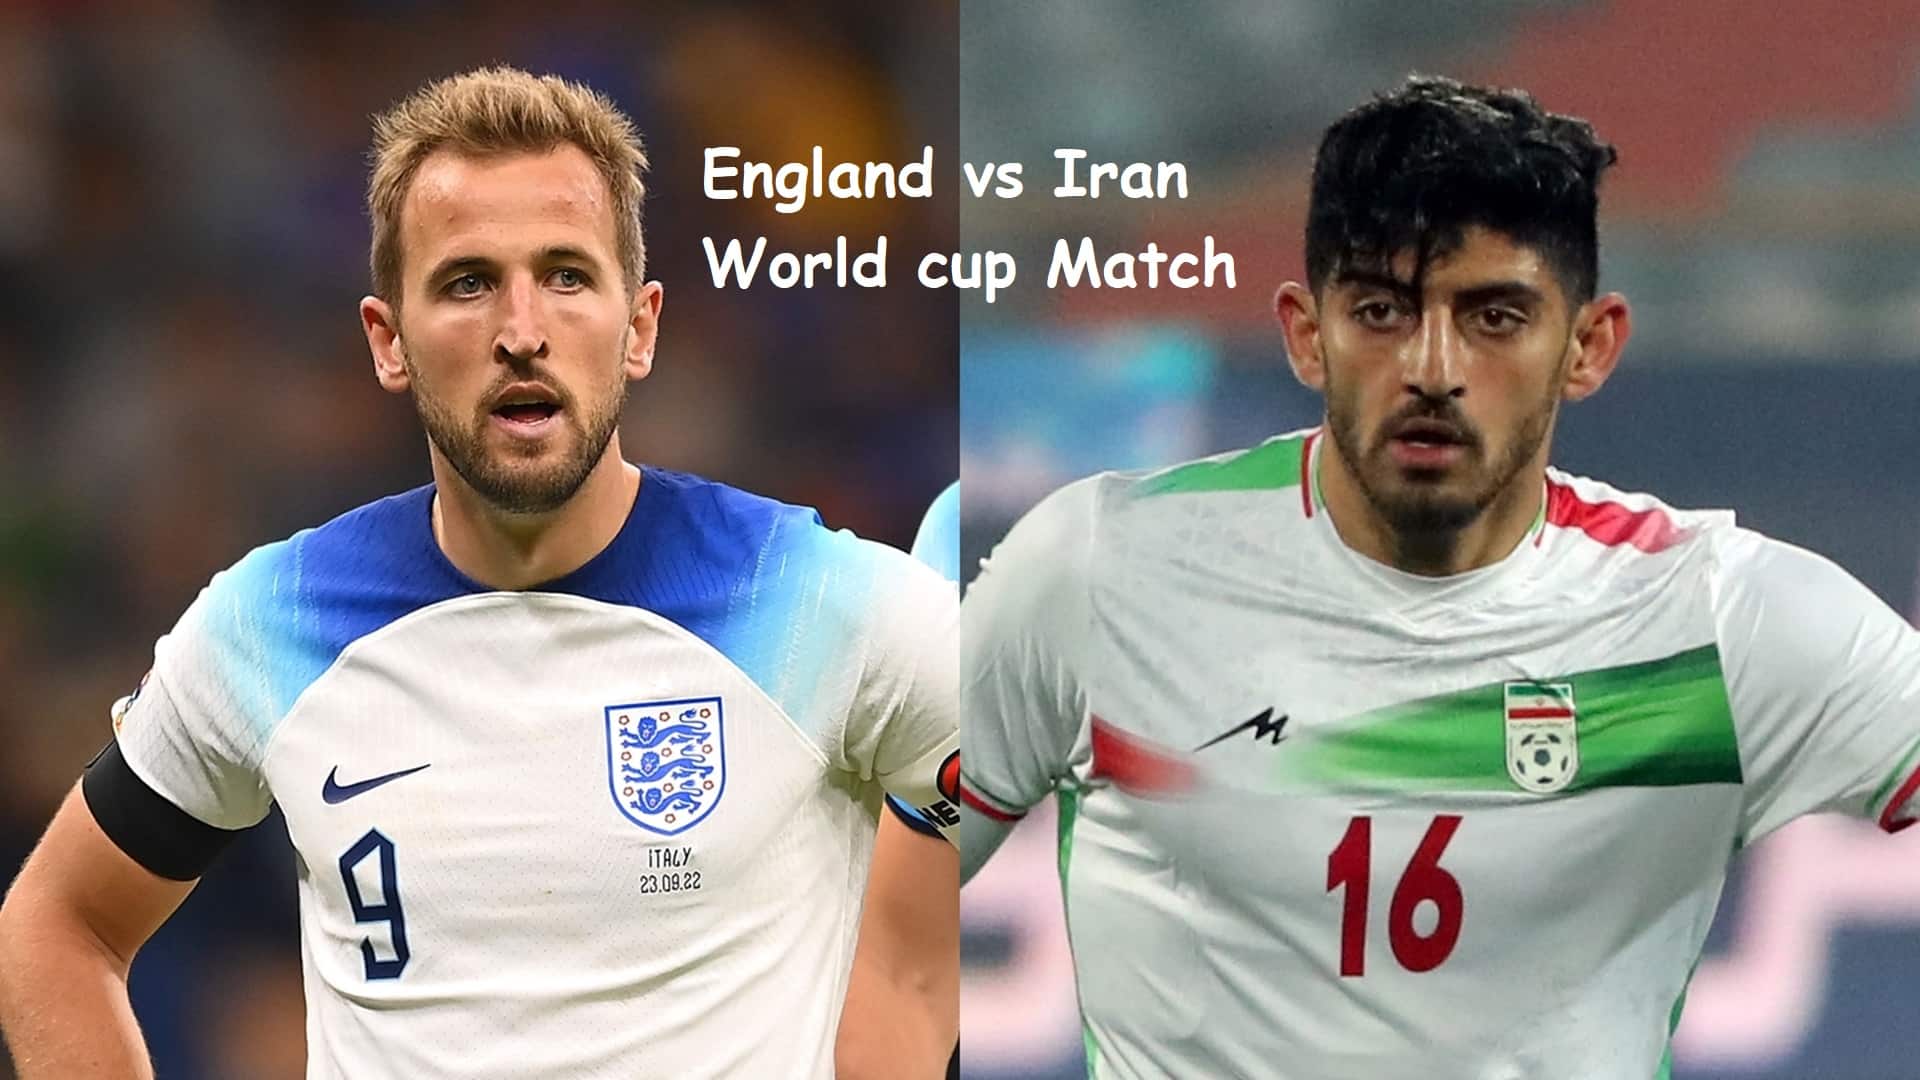 England vs Iran football world cup match today